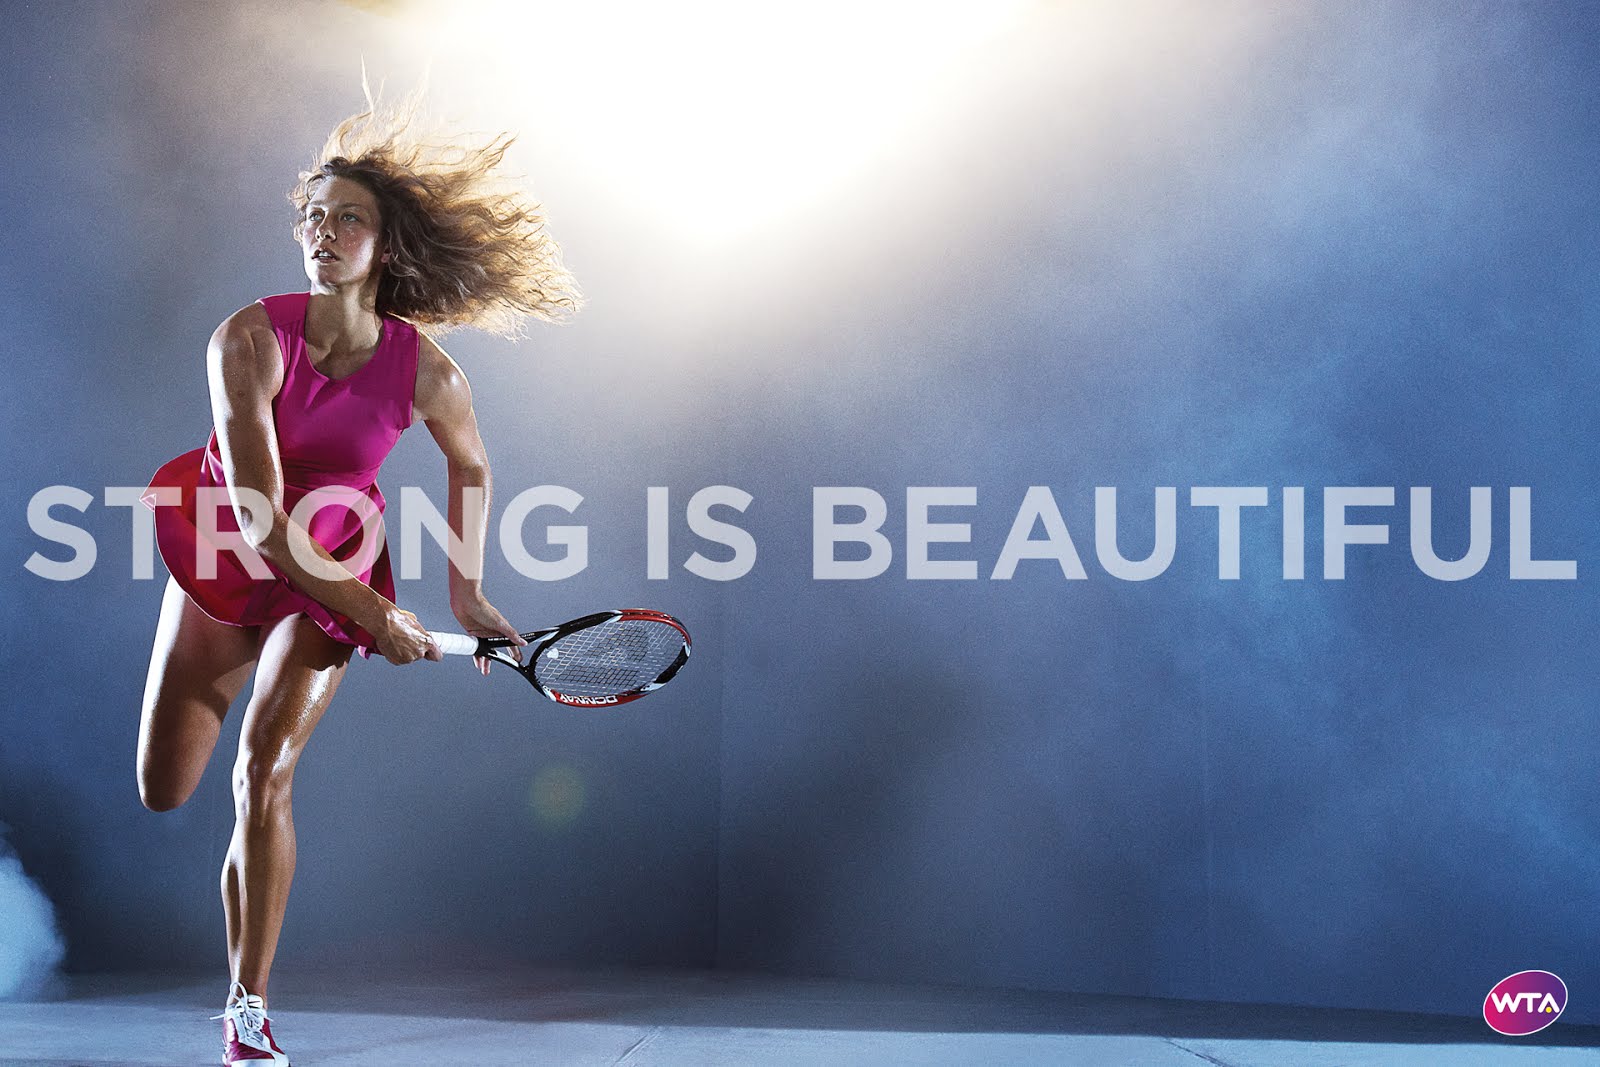 WTA. WTA логотип. Strong and beautiful. Strong is beautiful